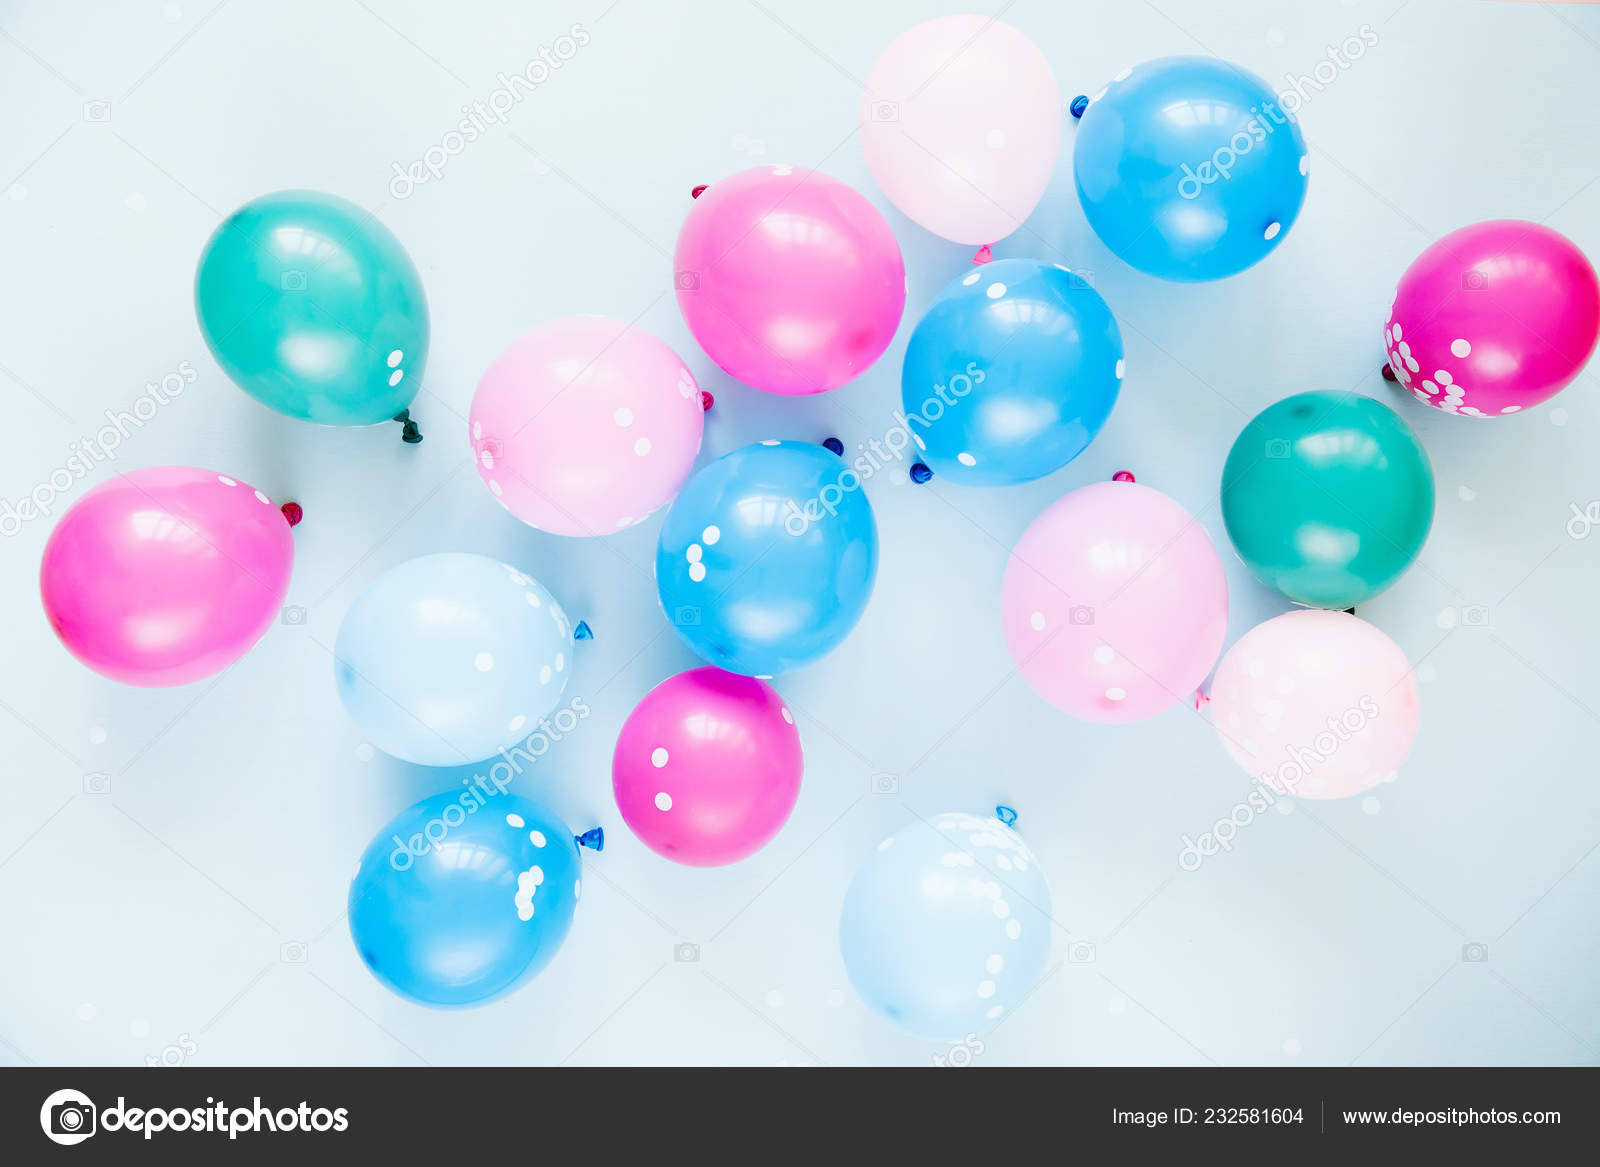 https://st4.depositphotos.com/6010472/23258/i/1600/depositphotos_232581604-stock-photo-colorful-balloons-pastel-color-background.jpg